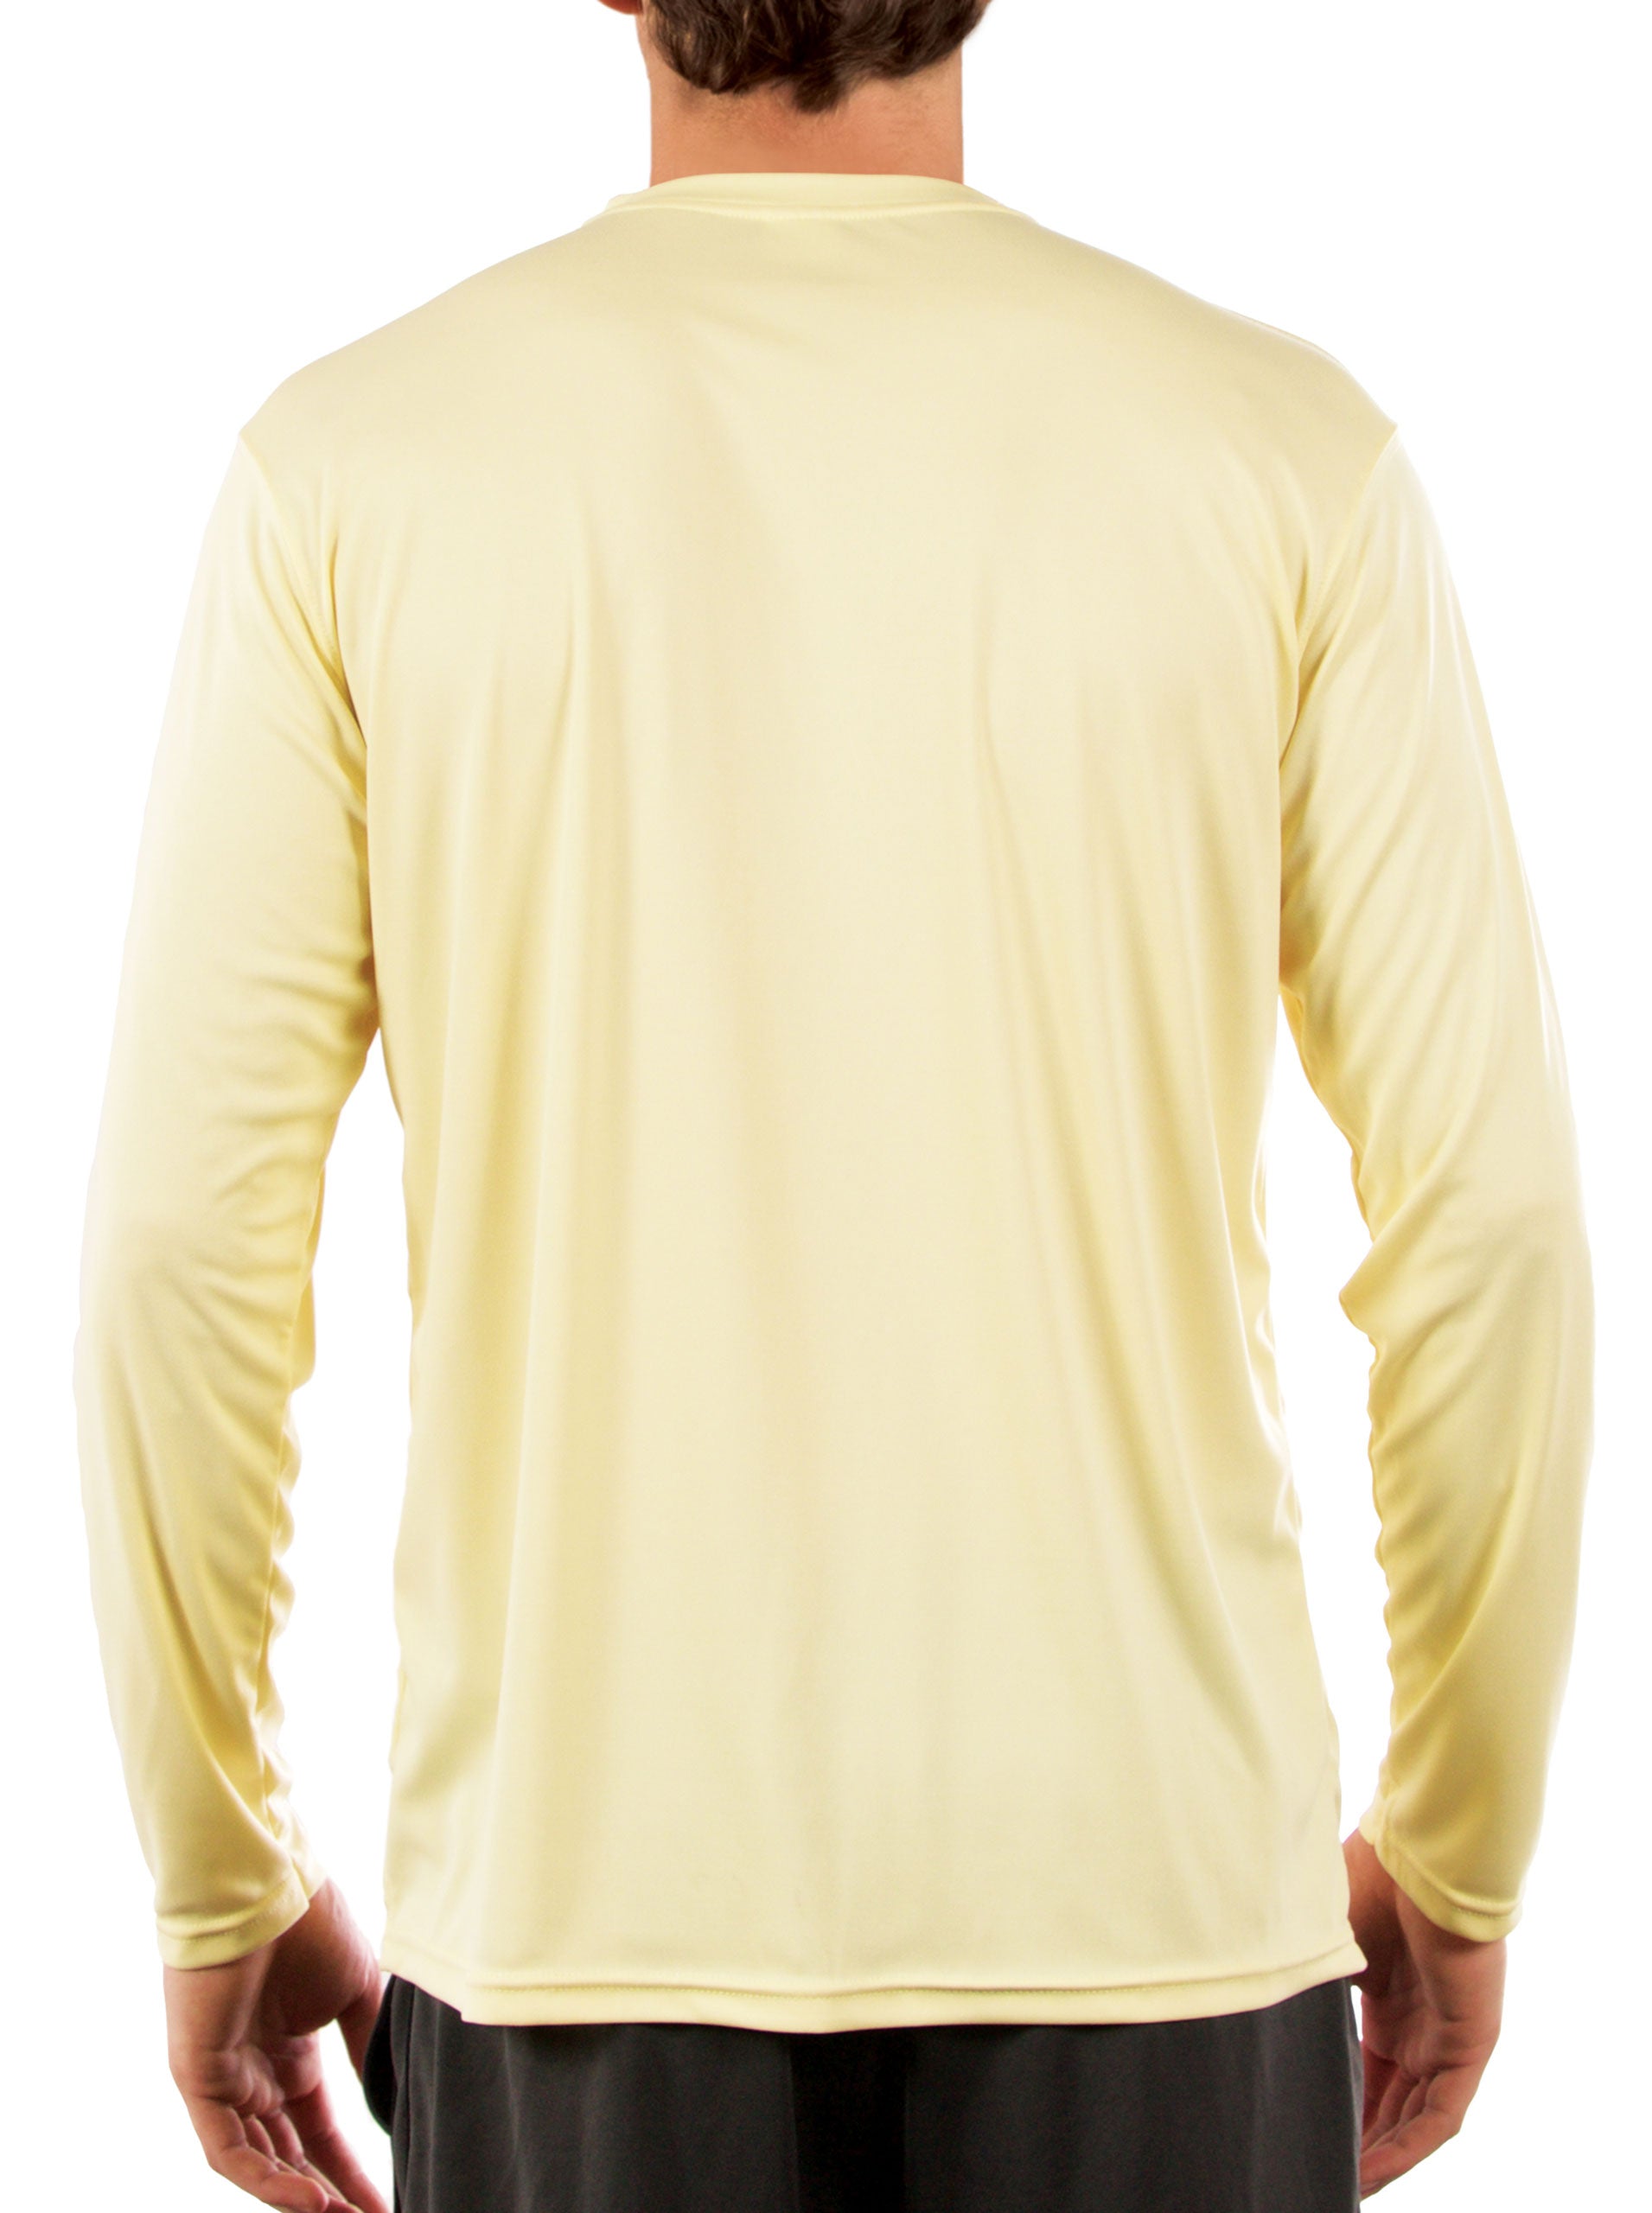 Fishing Shirts Men's Quick Dry Lightweight UPF 50+ Long Sleeve